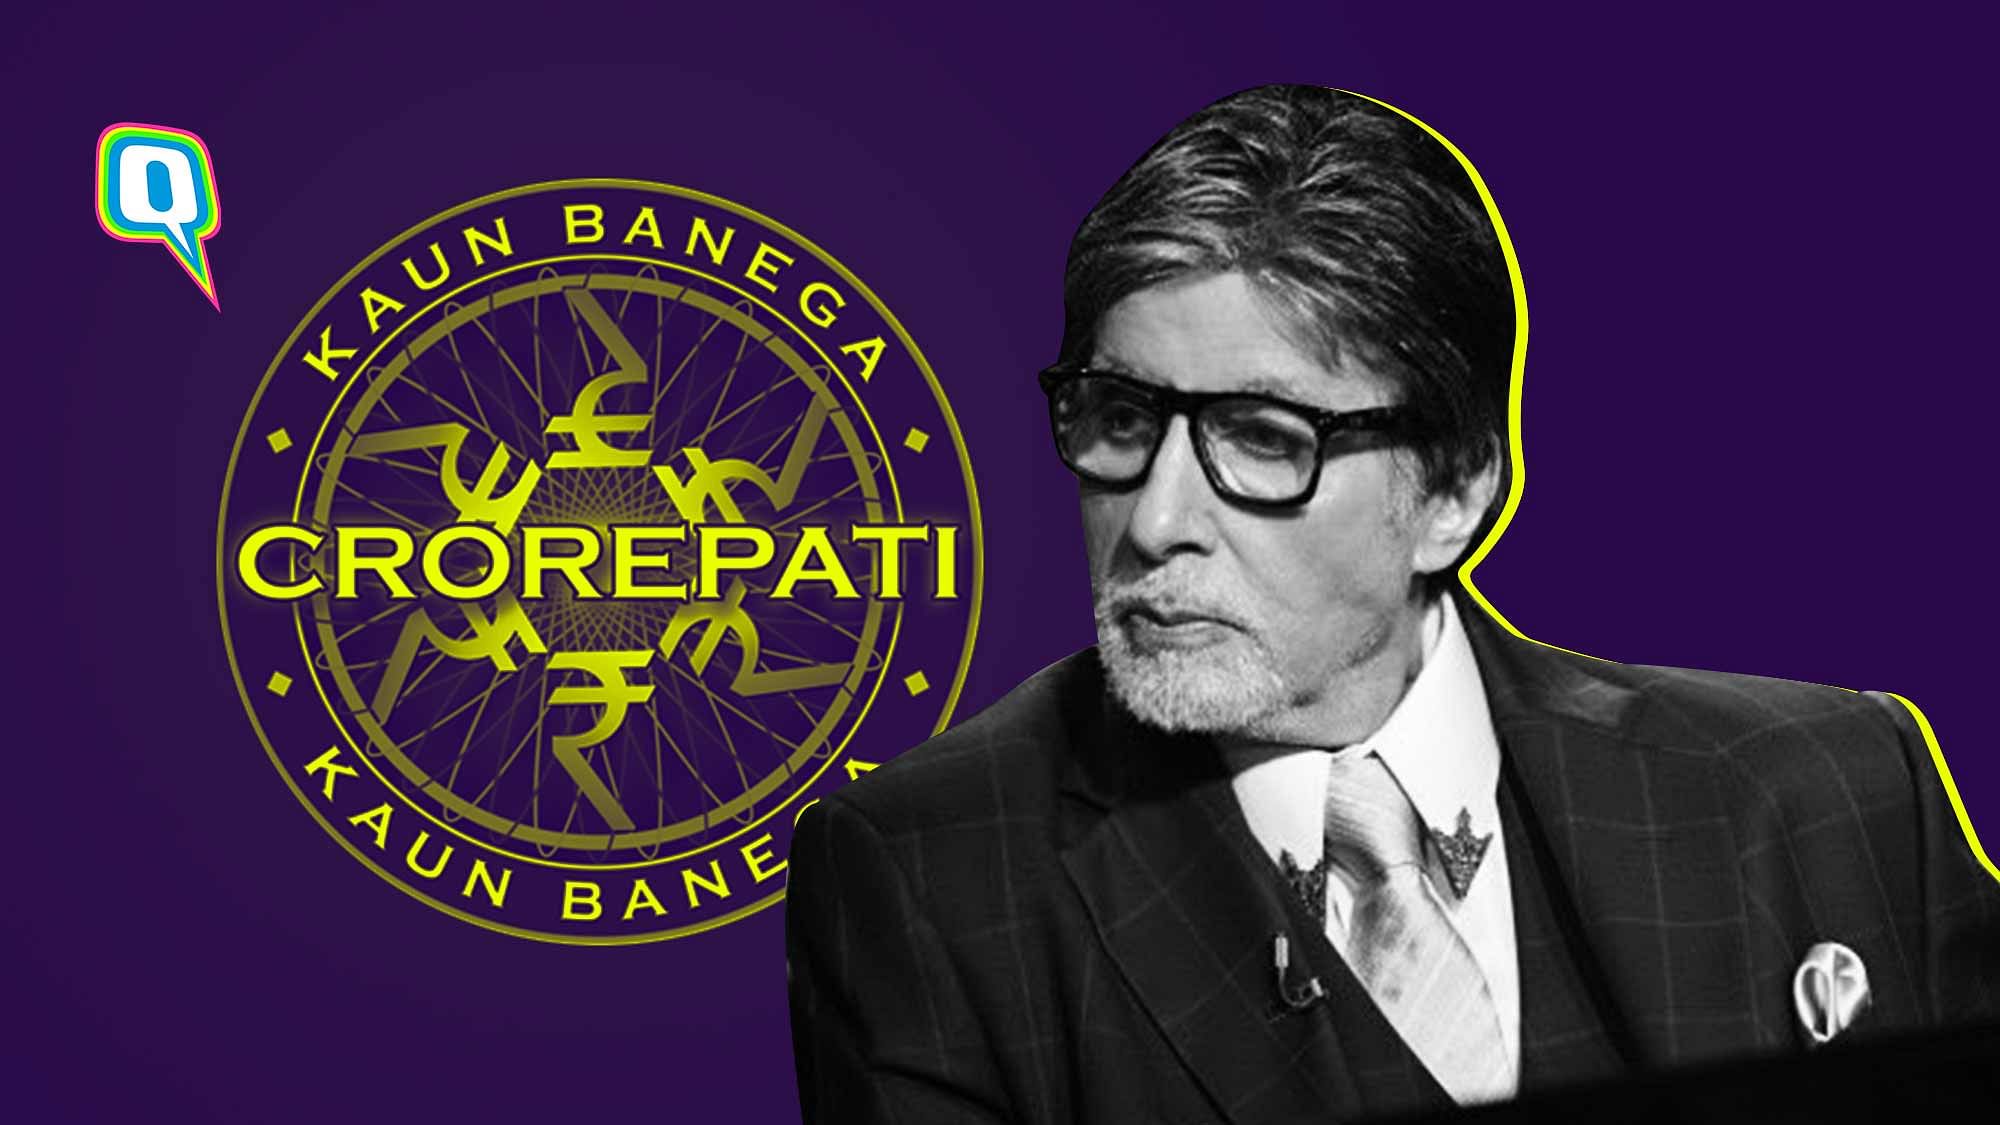 Kaun Banega Crorepati 12 Review Amitabh Bachchan's 'Kaun Banega